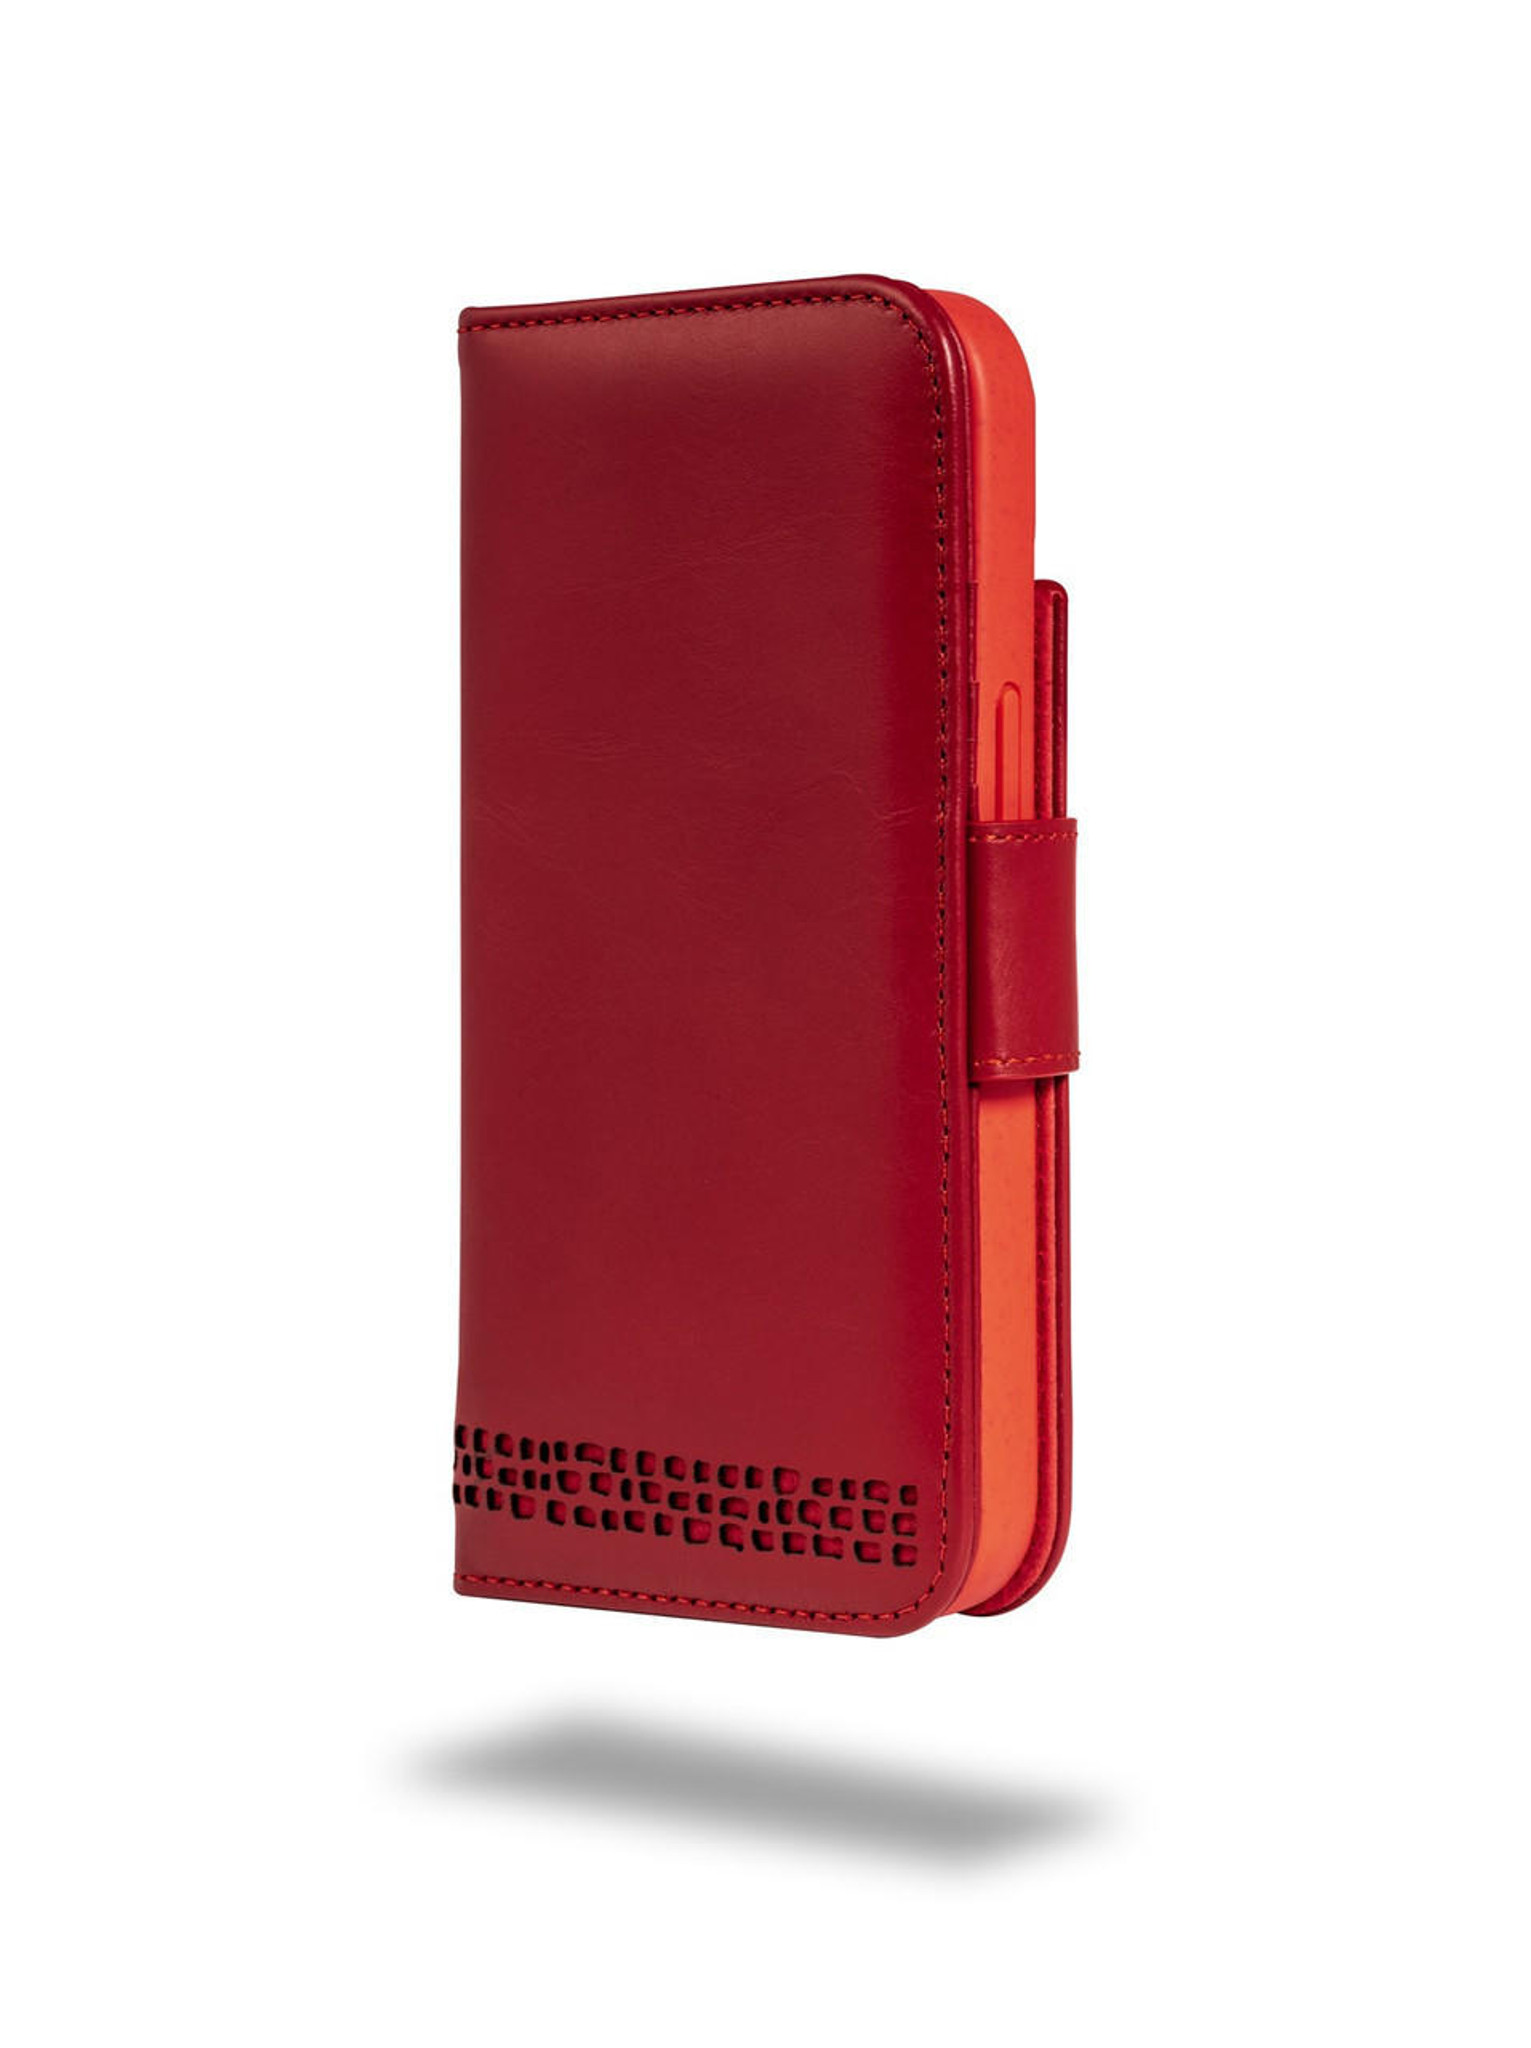 LOUIS VUITTON LV BAG ICON LOGO iPhone 15 Pro Max Case Cover